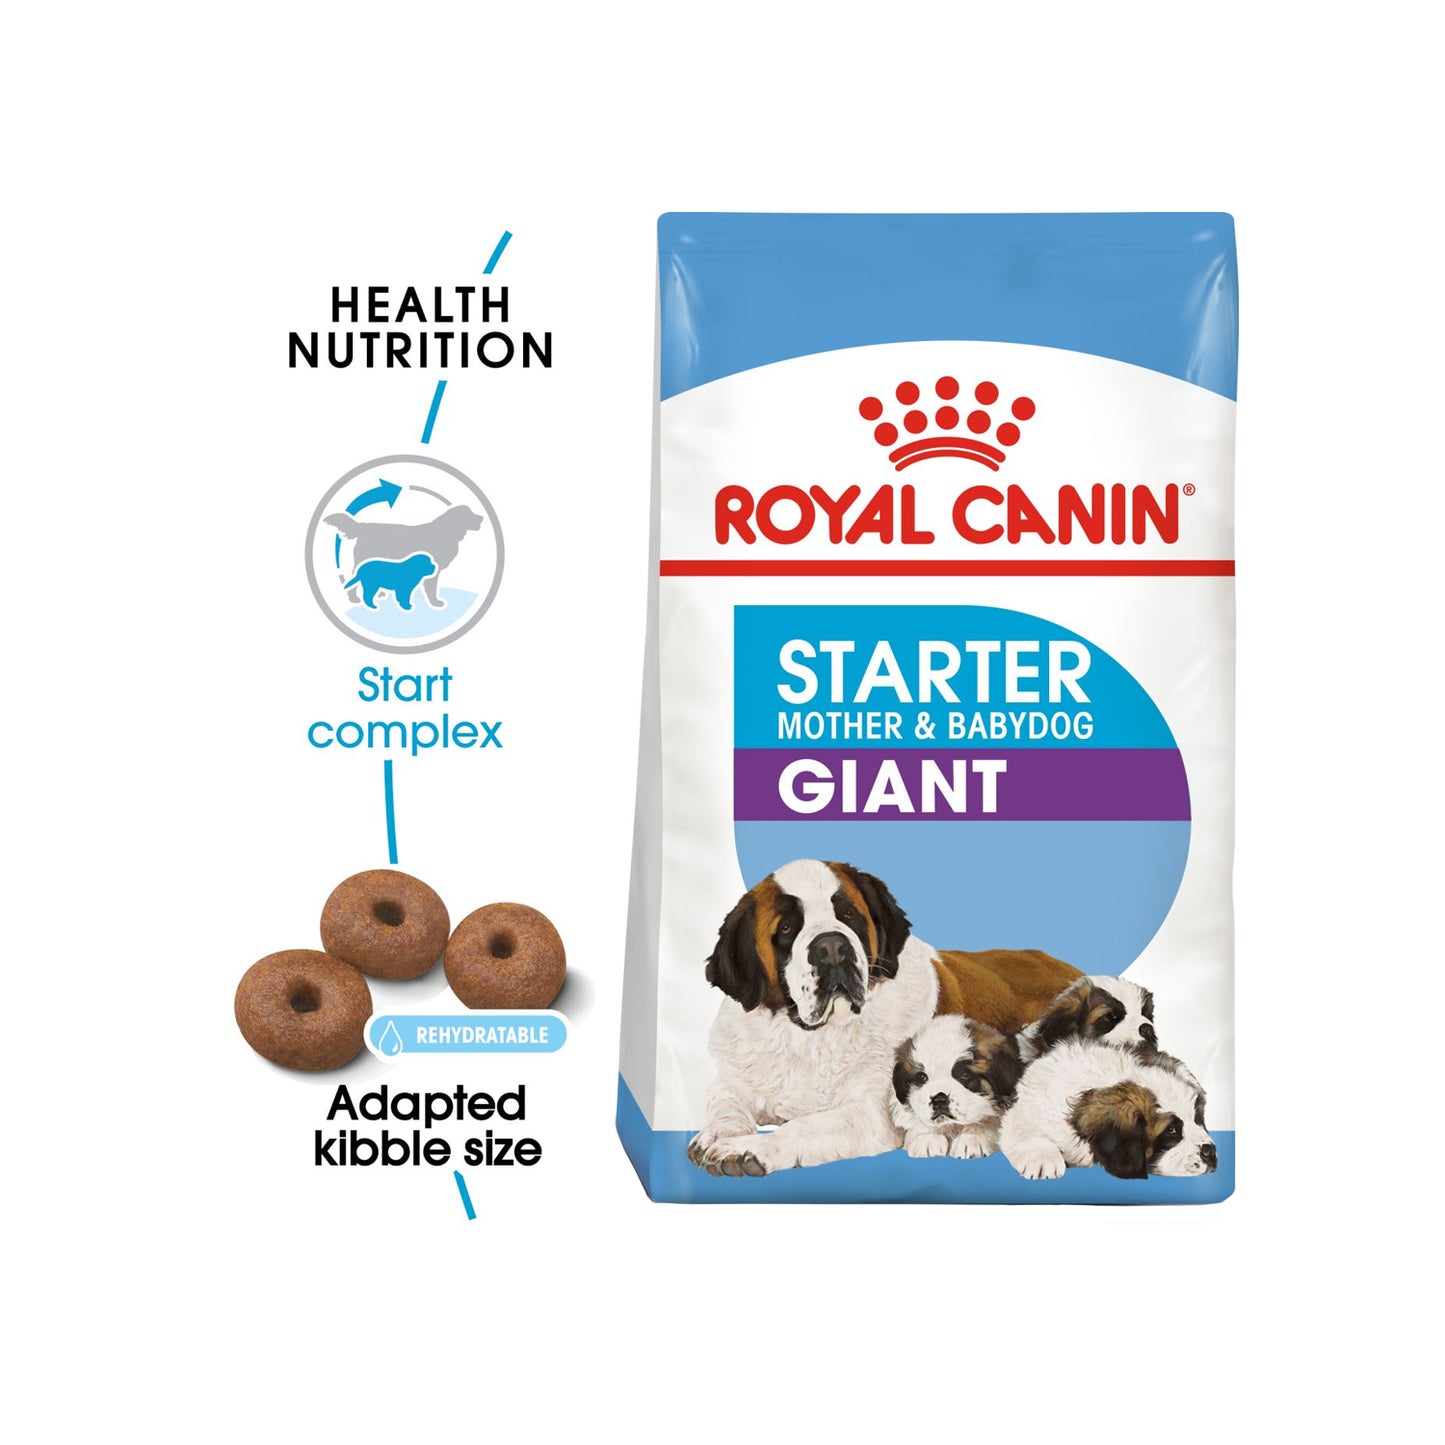 Royal Canin - Giant Starter Dry Dog Food